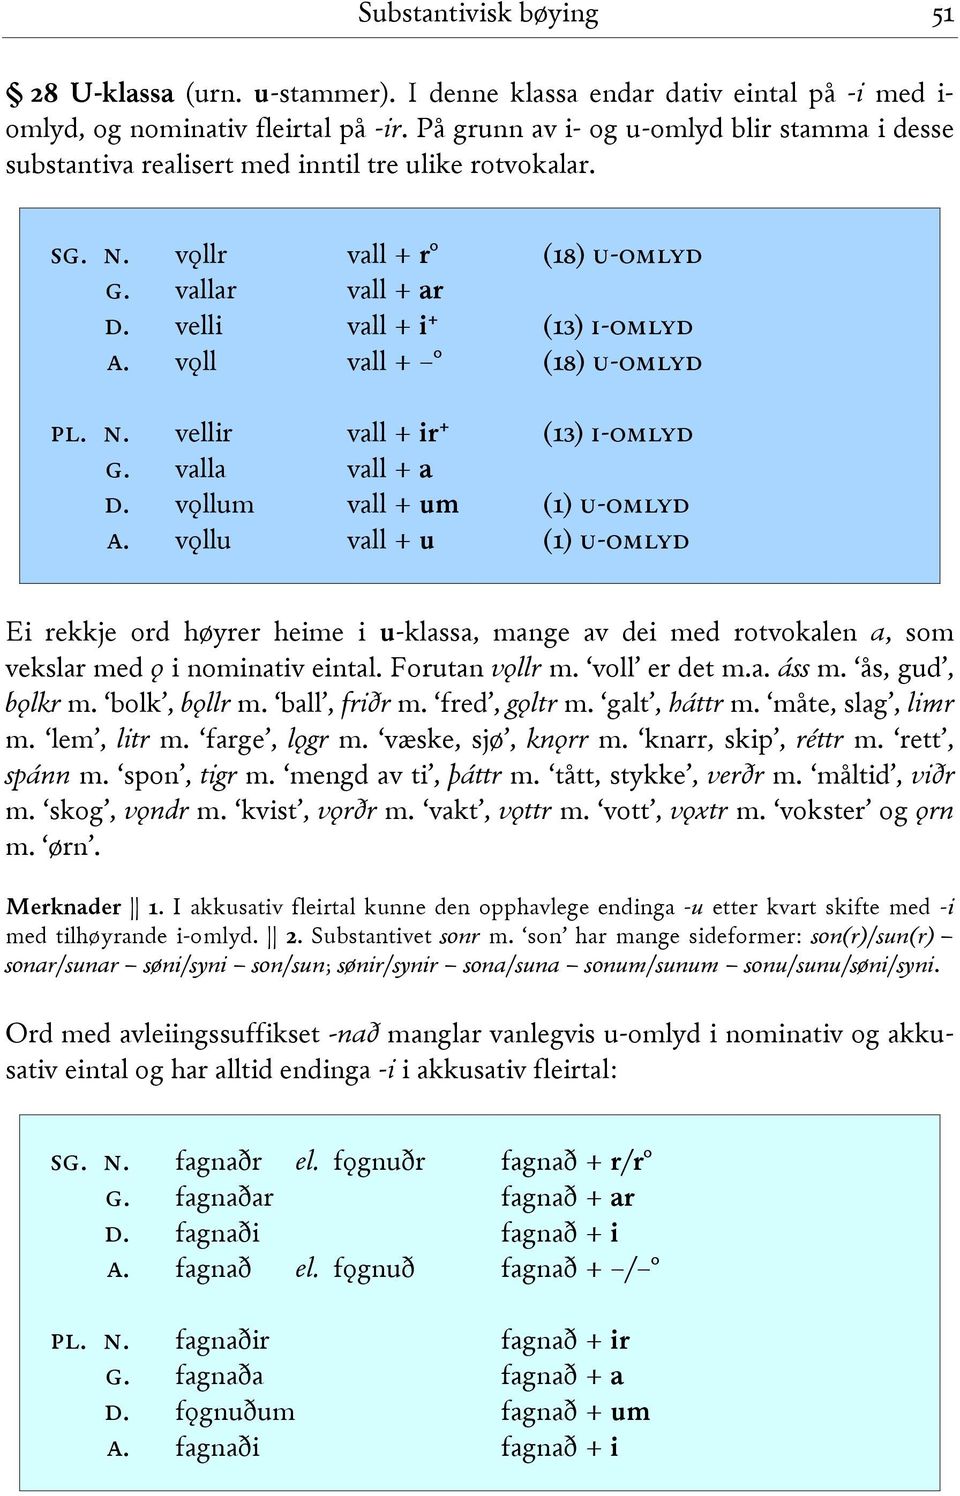 vǫll vall + (18) u-omlyd pl. n. vellir vall + ir+ (13) i-omlyd g. valla vall + a d. vǫllum vall + um (1) u-omlyd a.